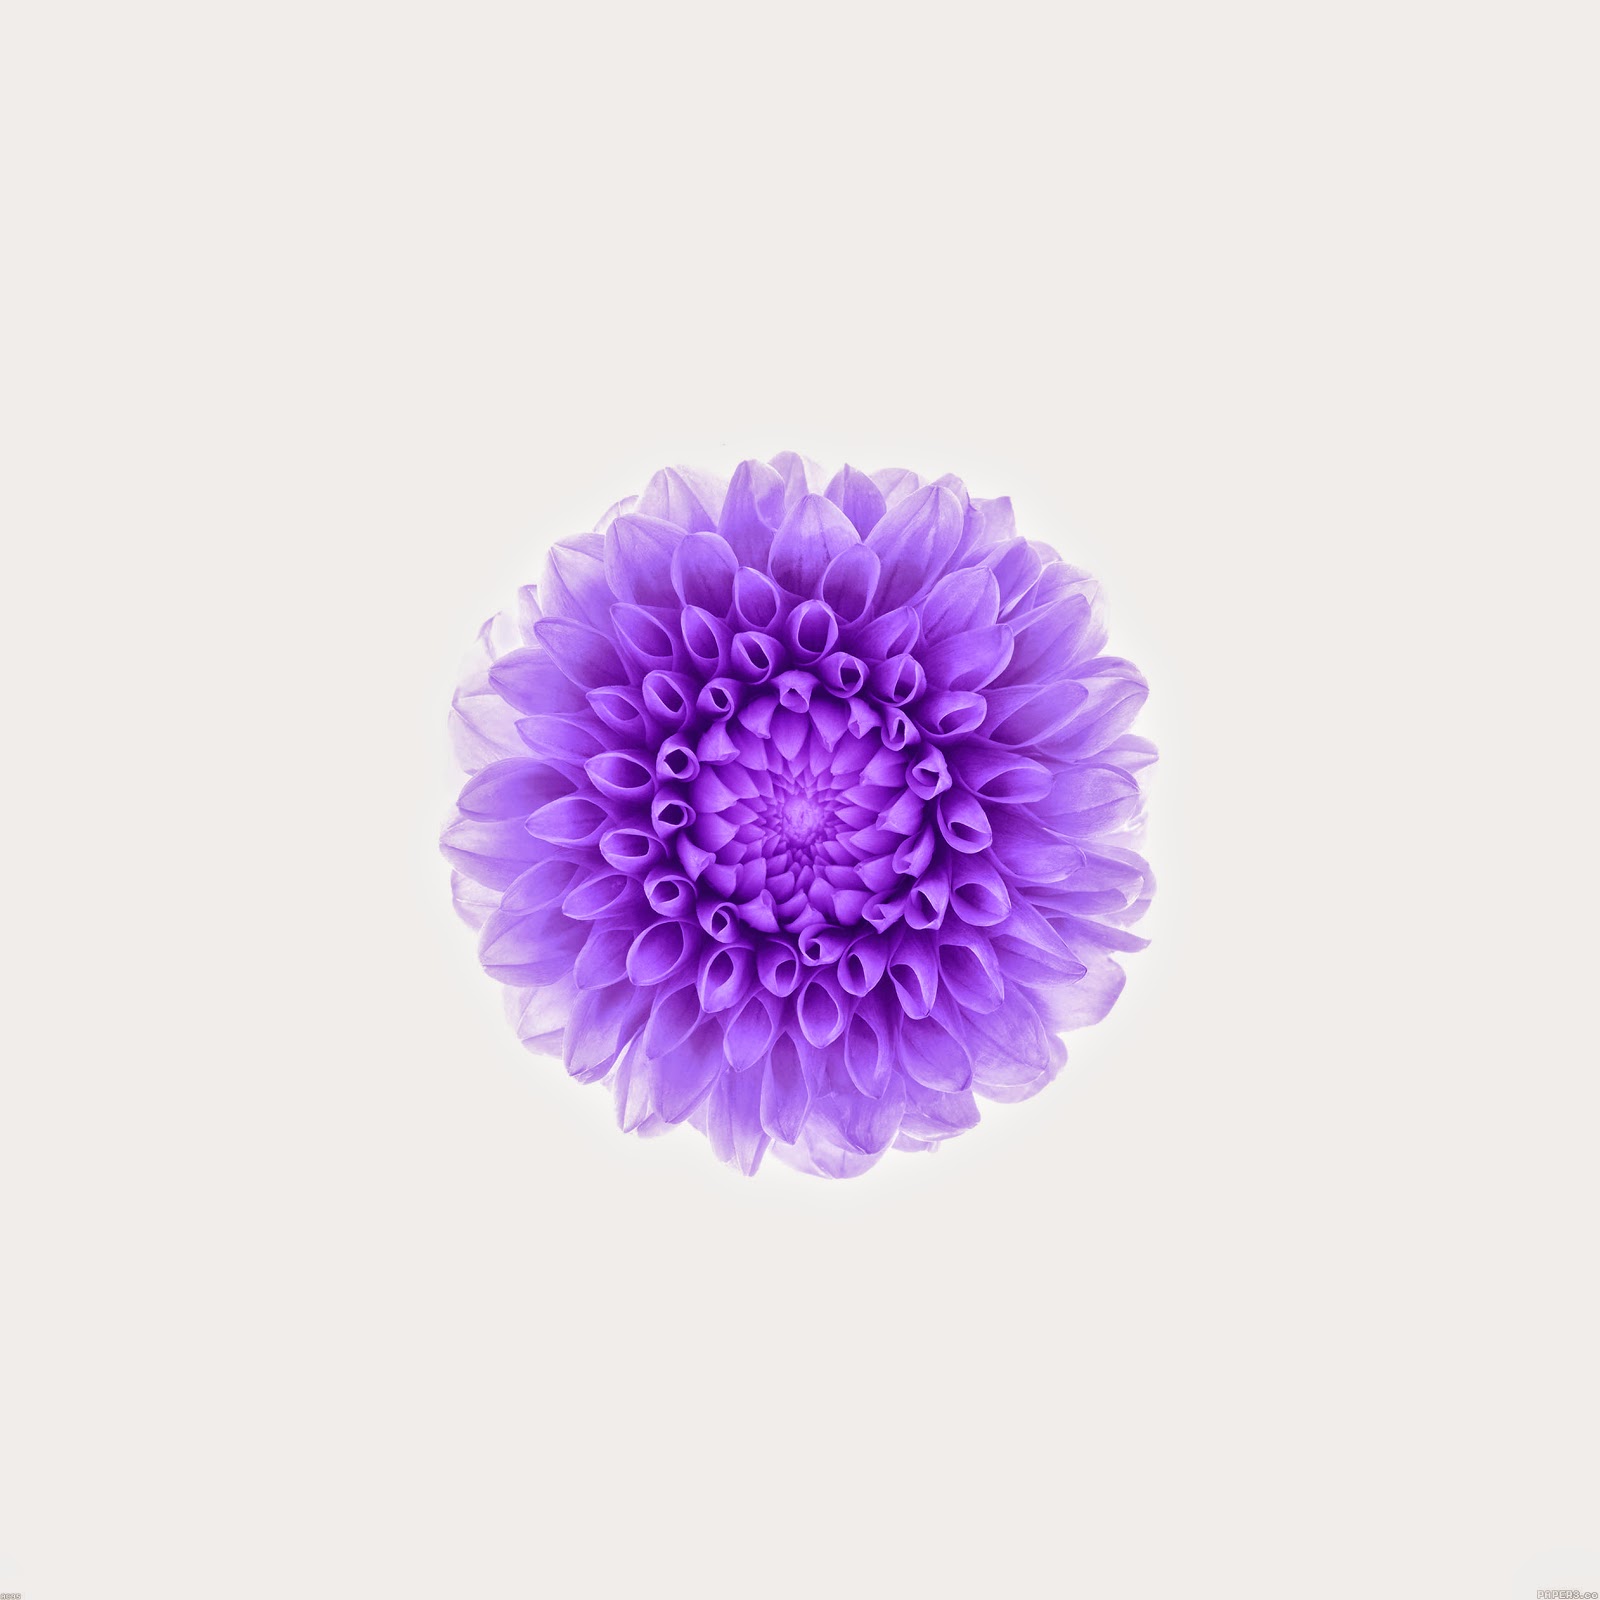 Ac95 Wallpaper Apple iPhone6 Plus Ios8 Flower Purple Jpg